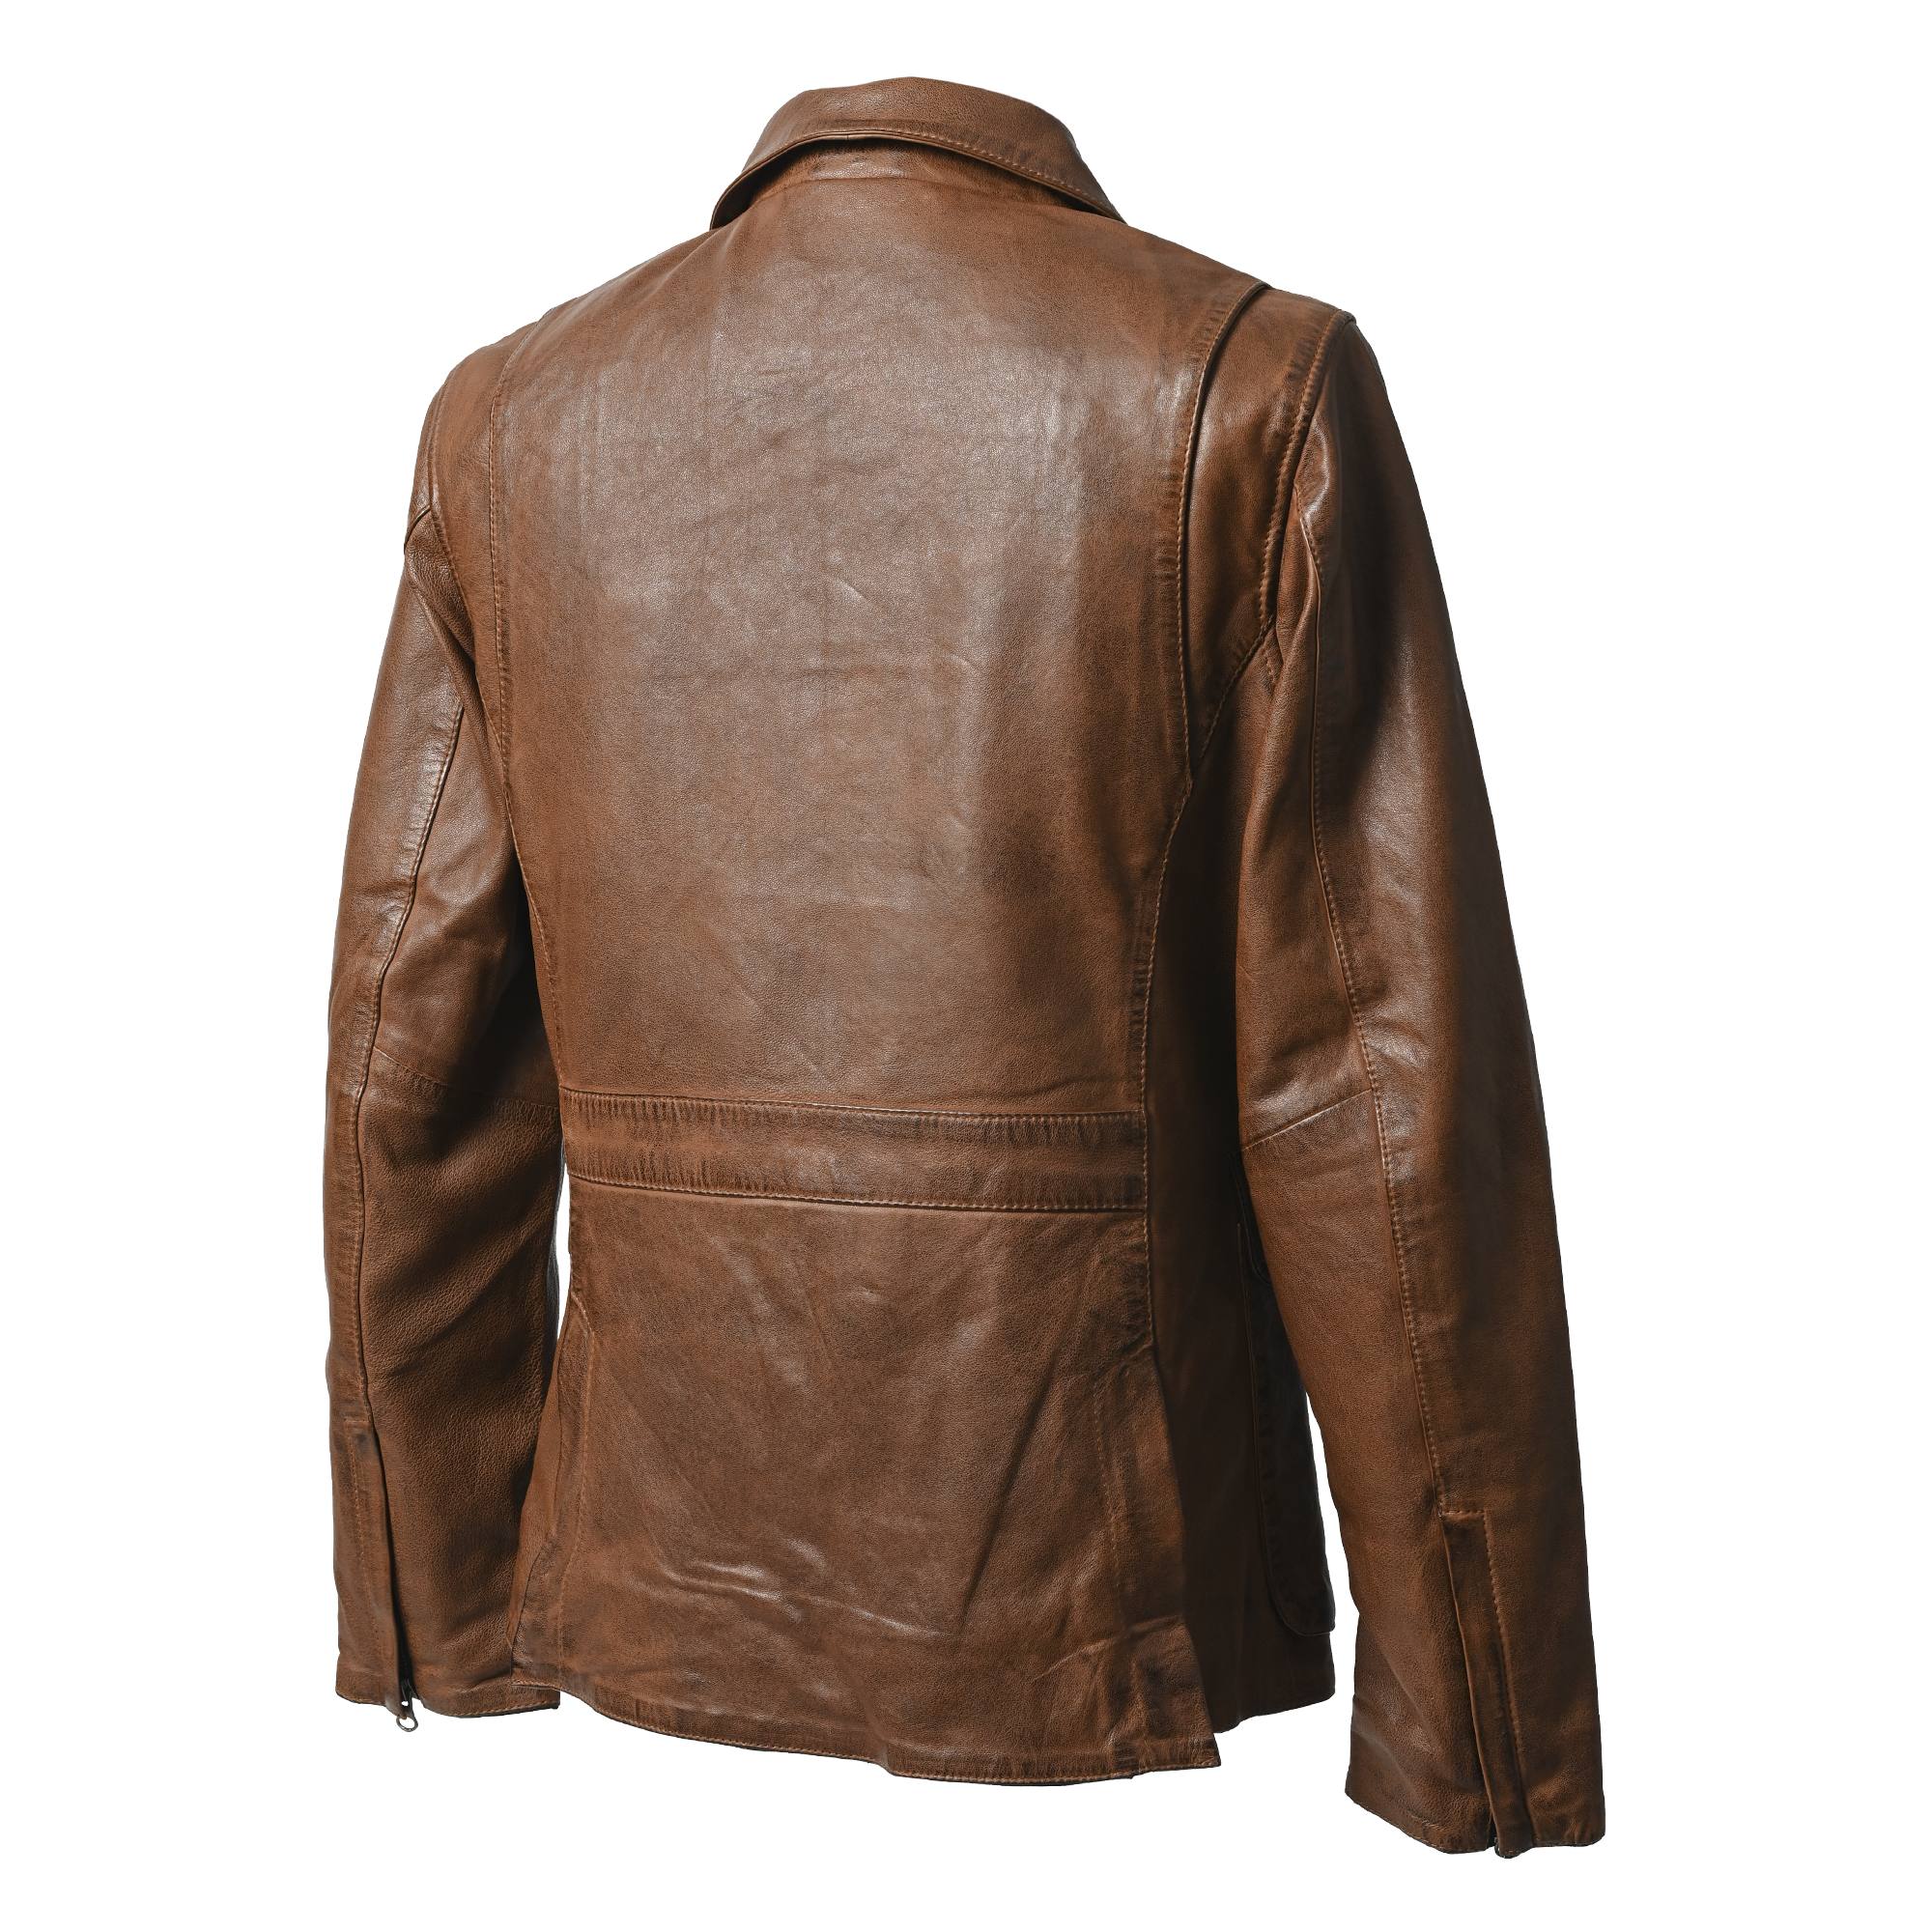 RIDEZ GENTS JACKET Motorcycle Leather Jacket Brown RLJ900 